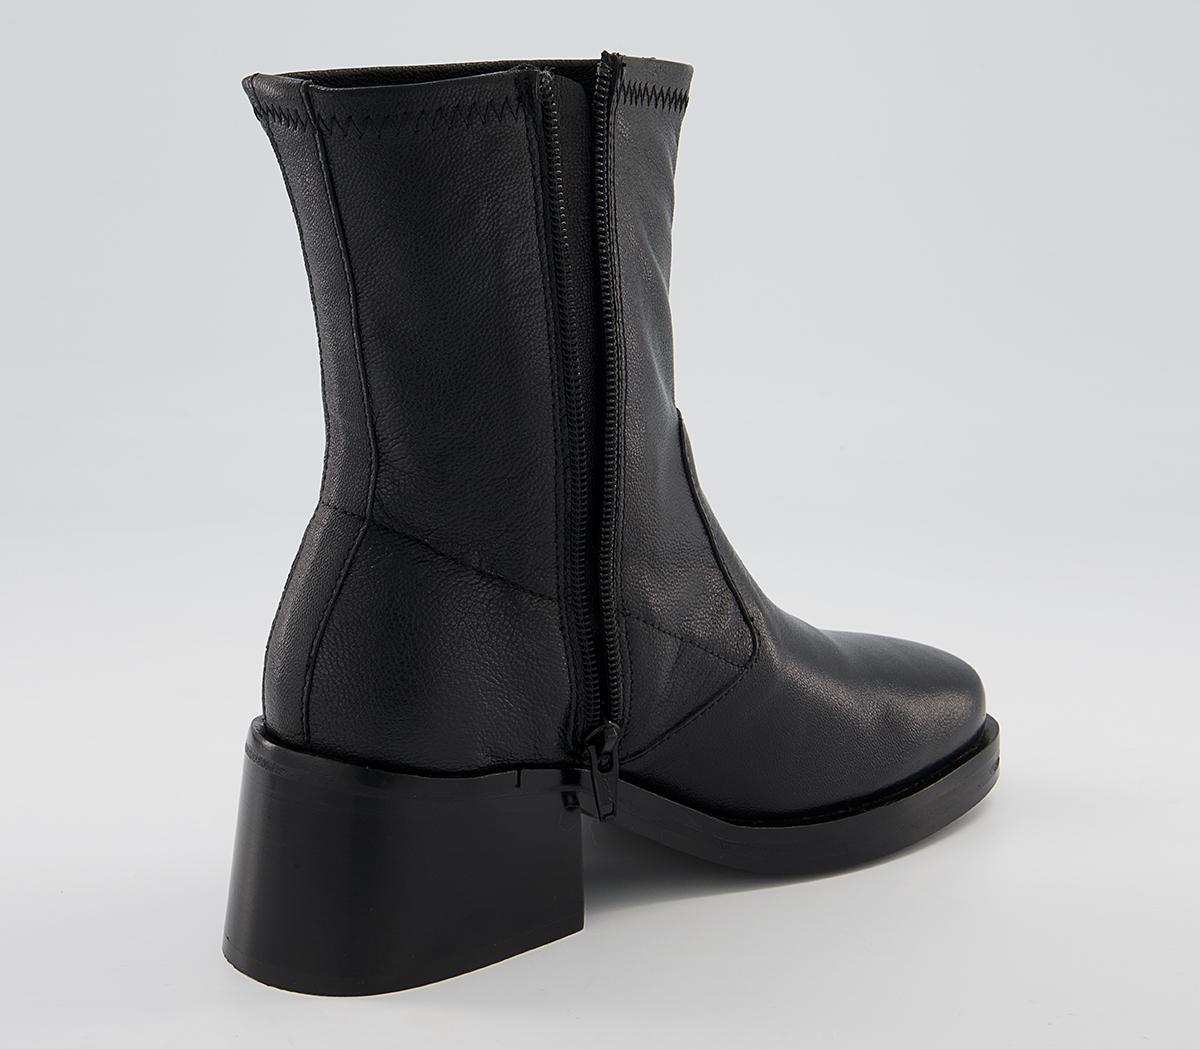 OFFICE Adventure Plain Block Heel Sock Boots Black Leather Women's